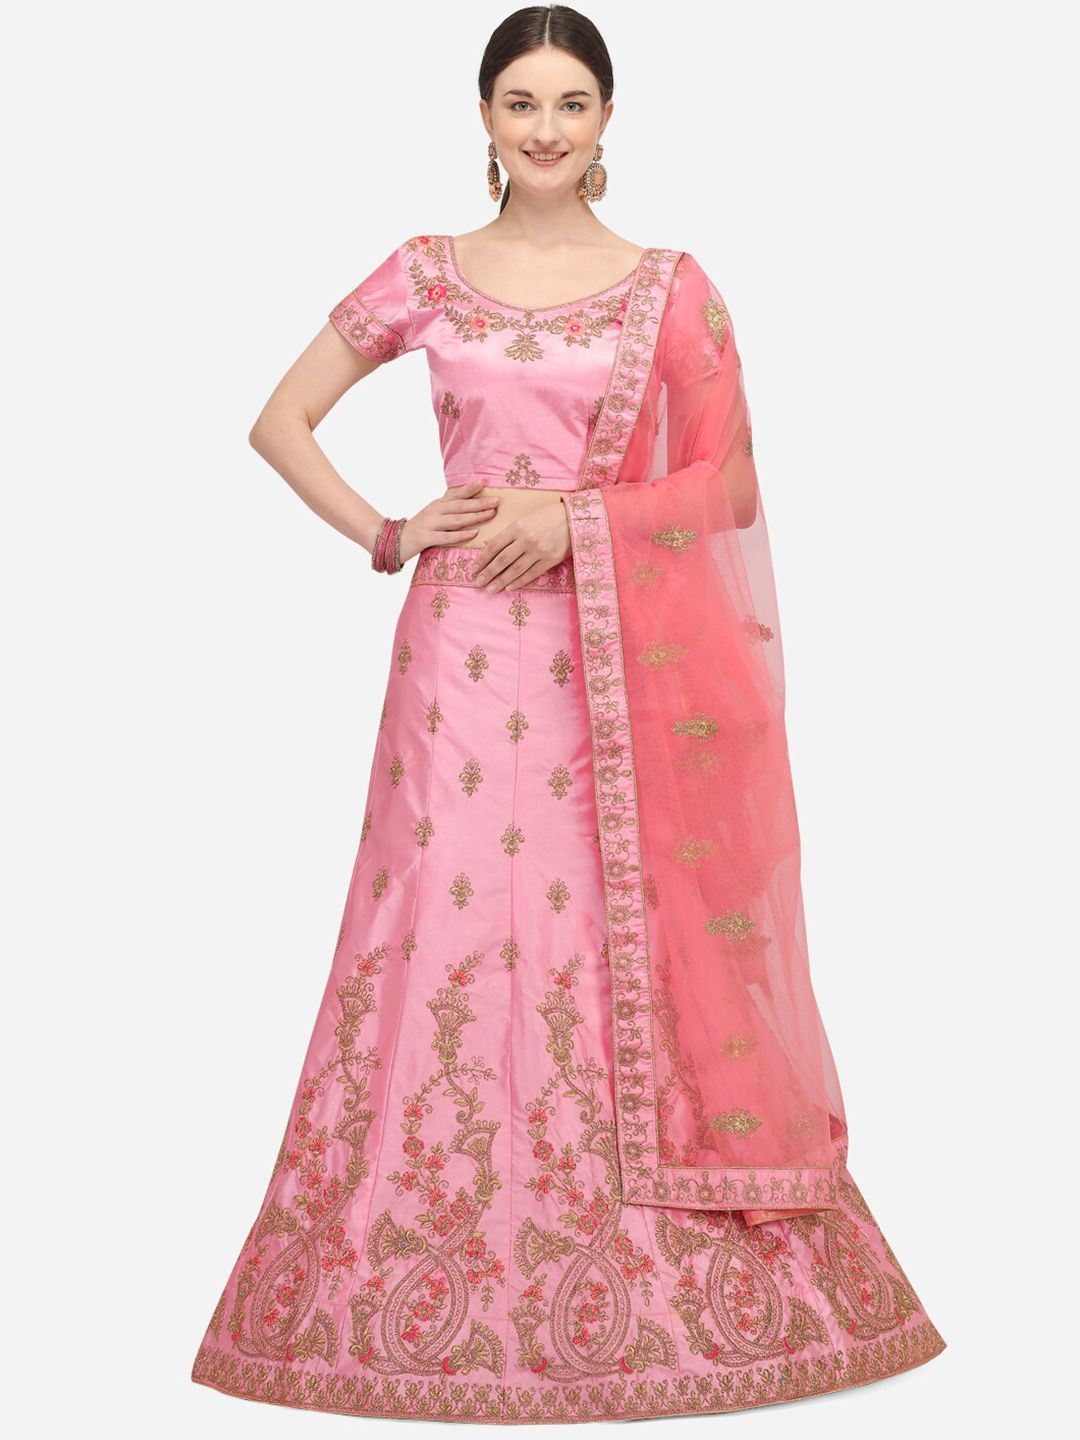 Netram Women Pink Embroidered Semi-Stitched Lehenga Choli with Dupatta Price in India